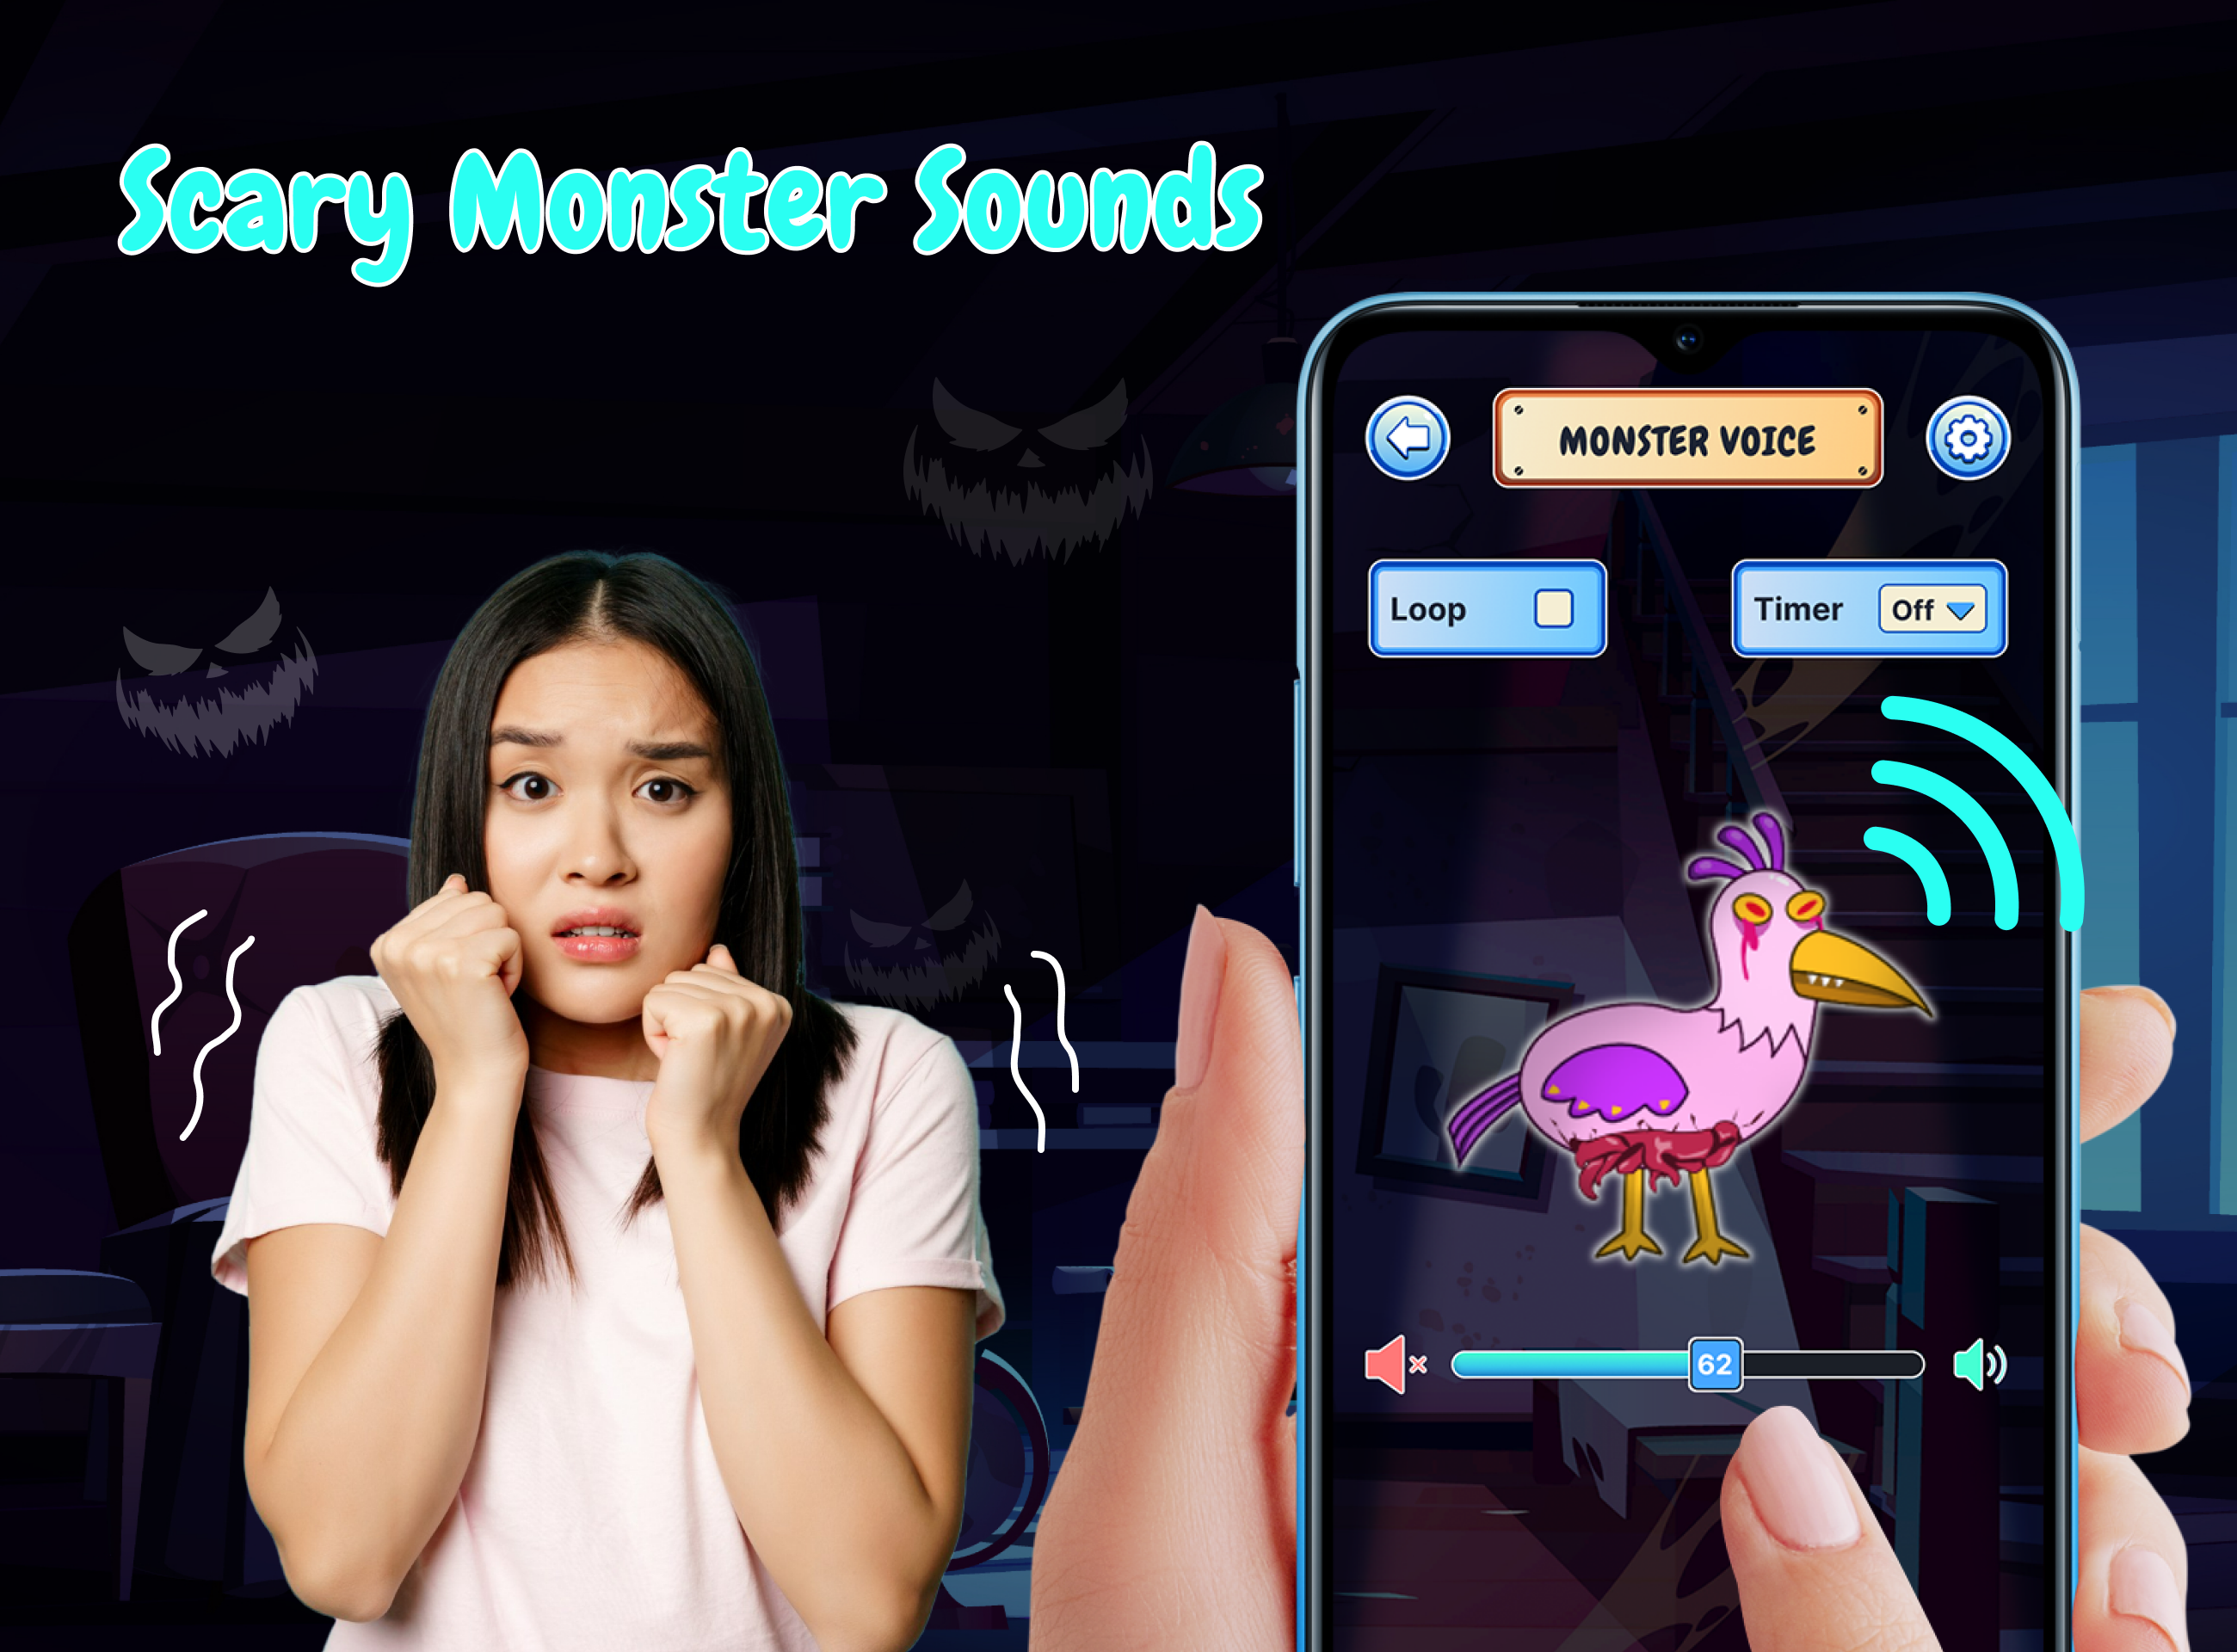 Play Monster Voice - Prank Sound Online